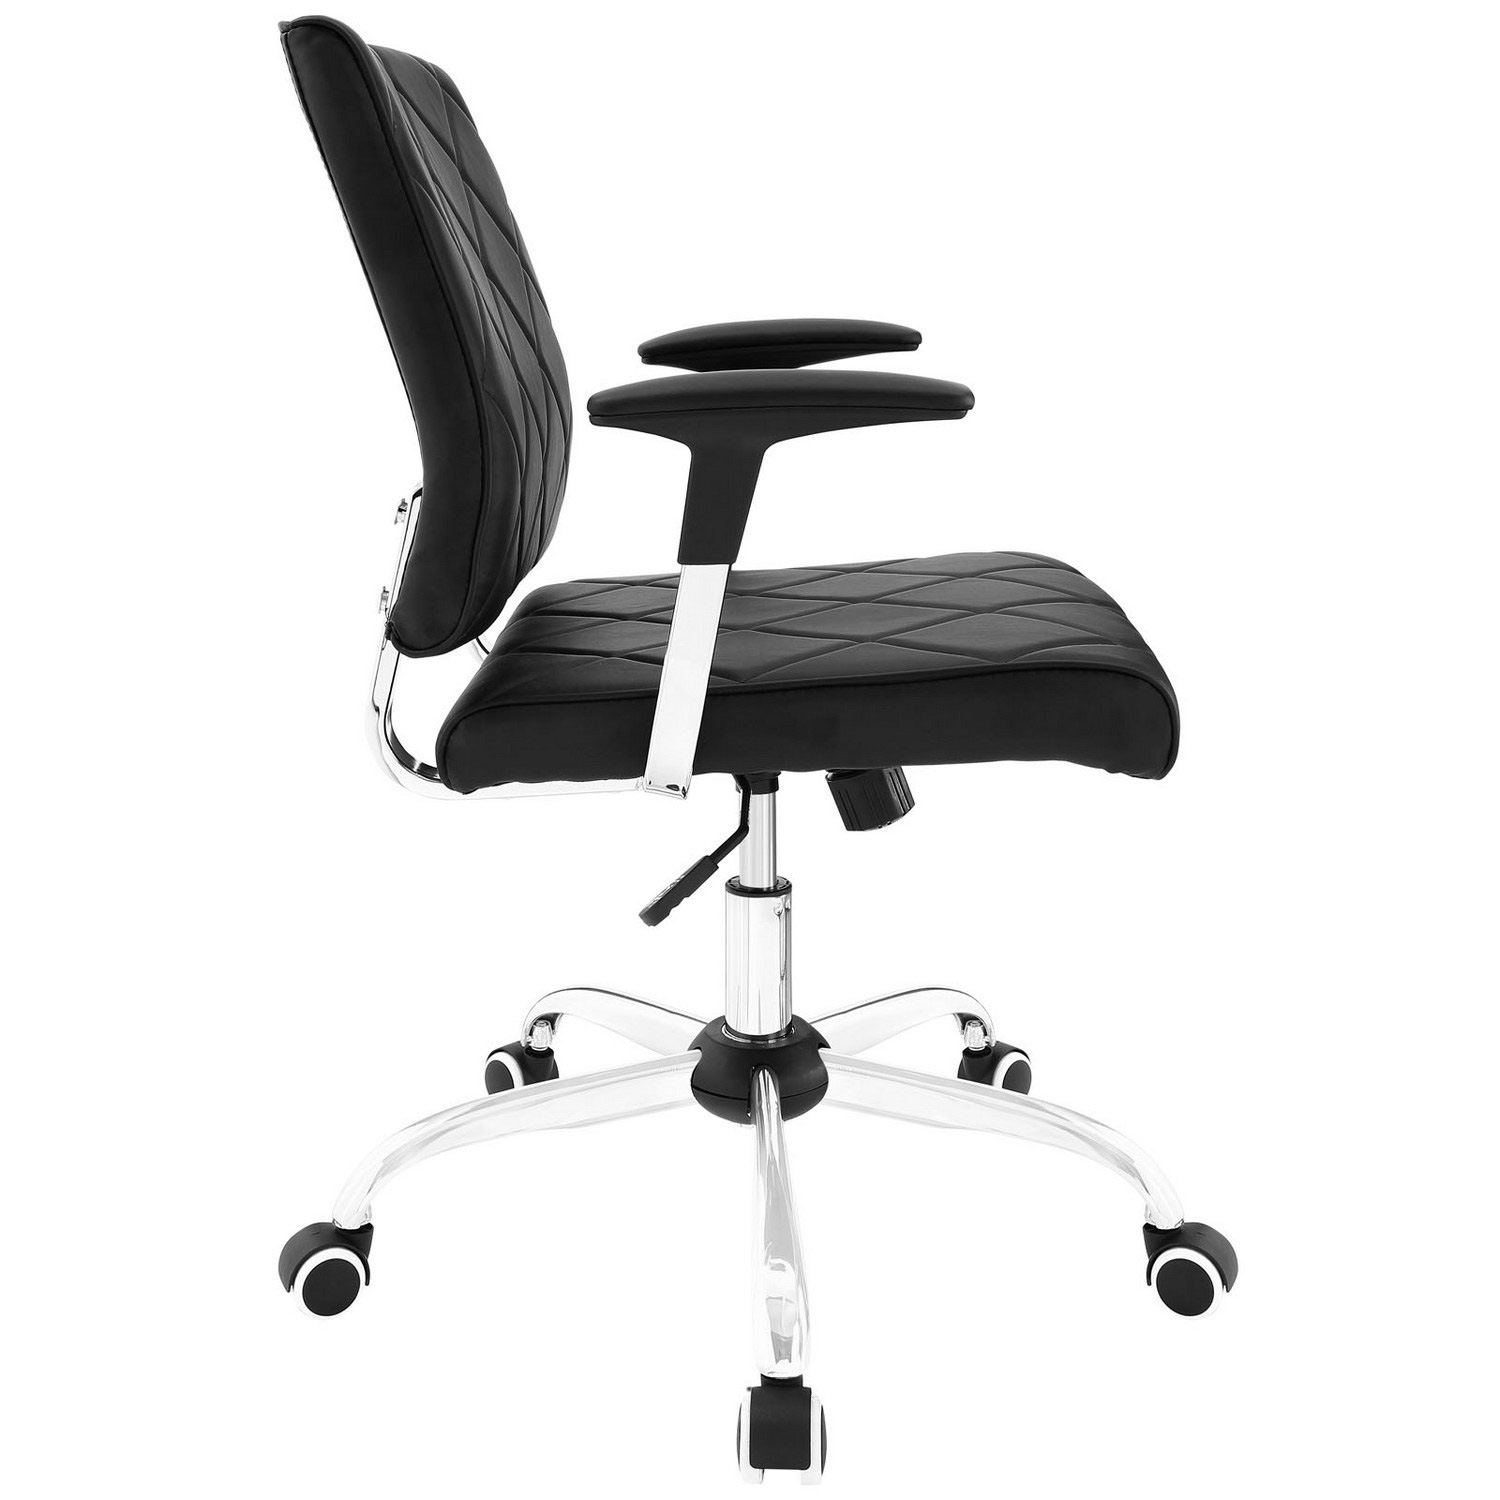 Modway Lattice Vinyl Office Chair - Black